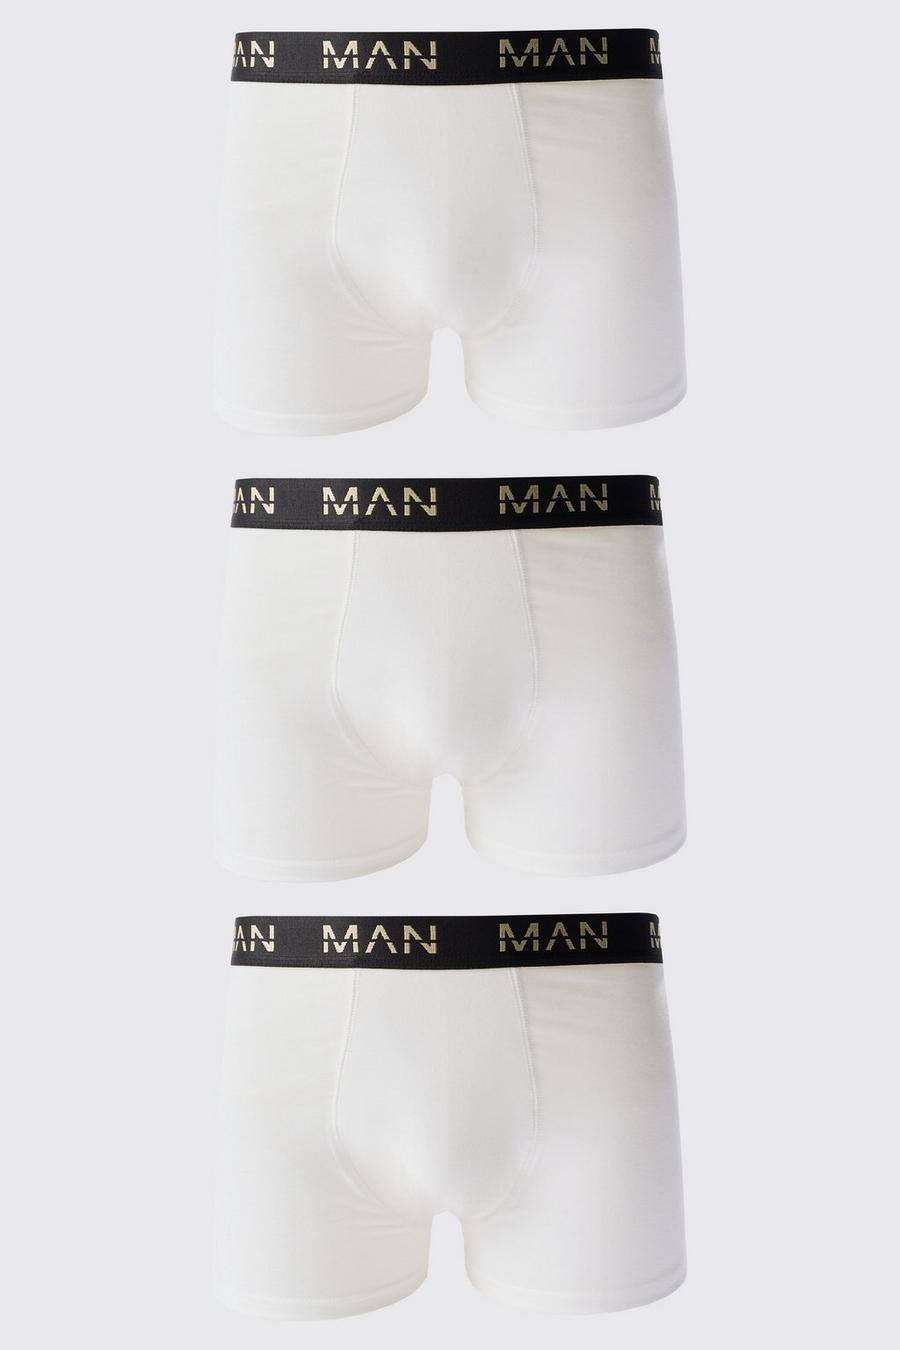 Boxer Man Dash color oro bianchi - set di 3 paia, White image number 1